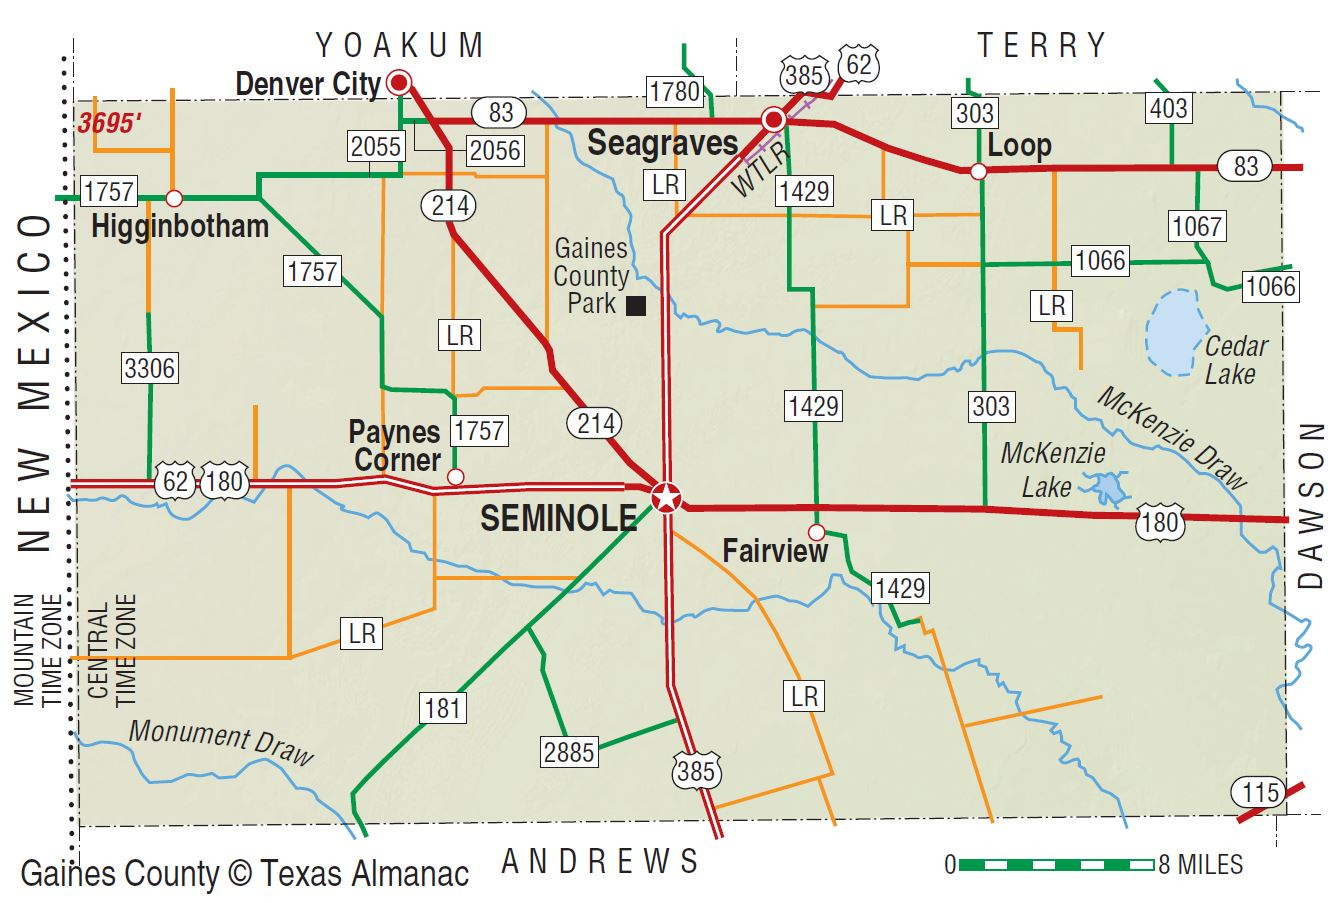 Gaines County | The Handbook Of Texas Online| Texas State Historical - Gaines County Texas Section Map